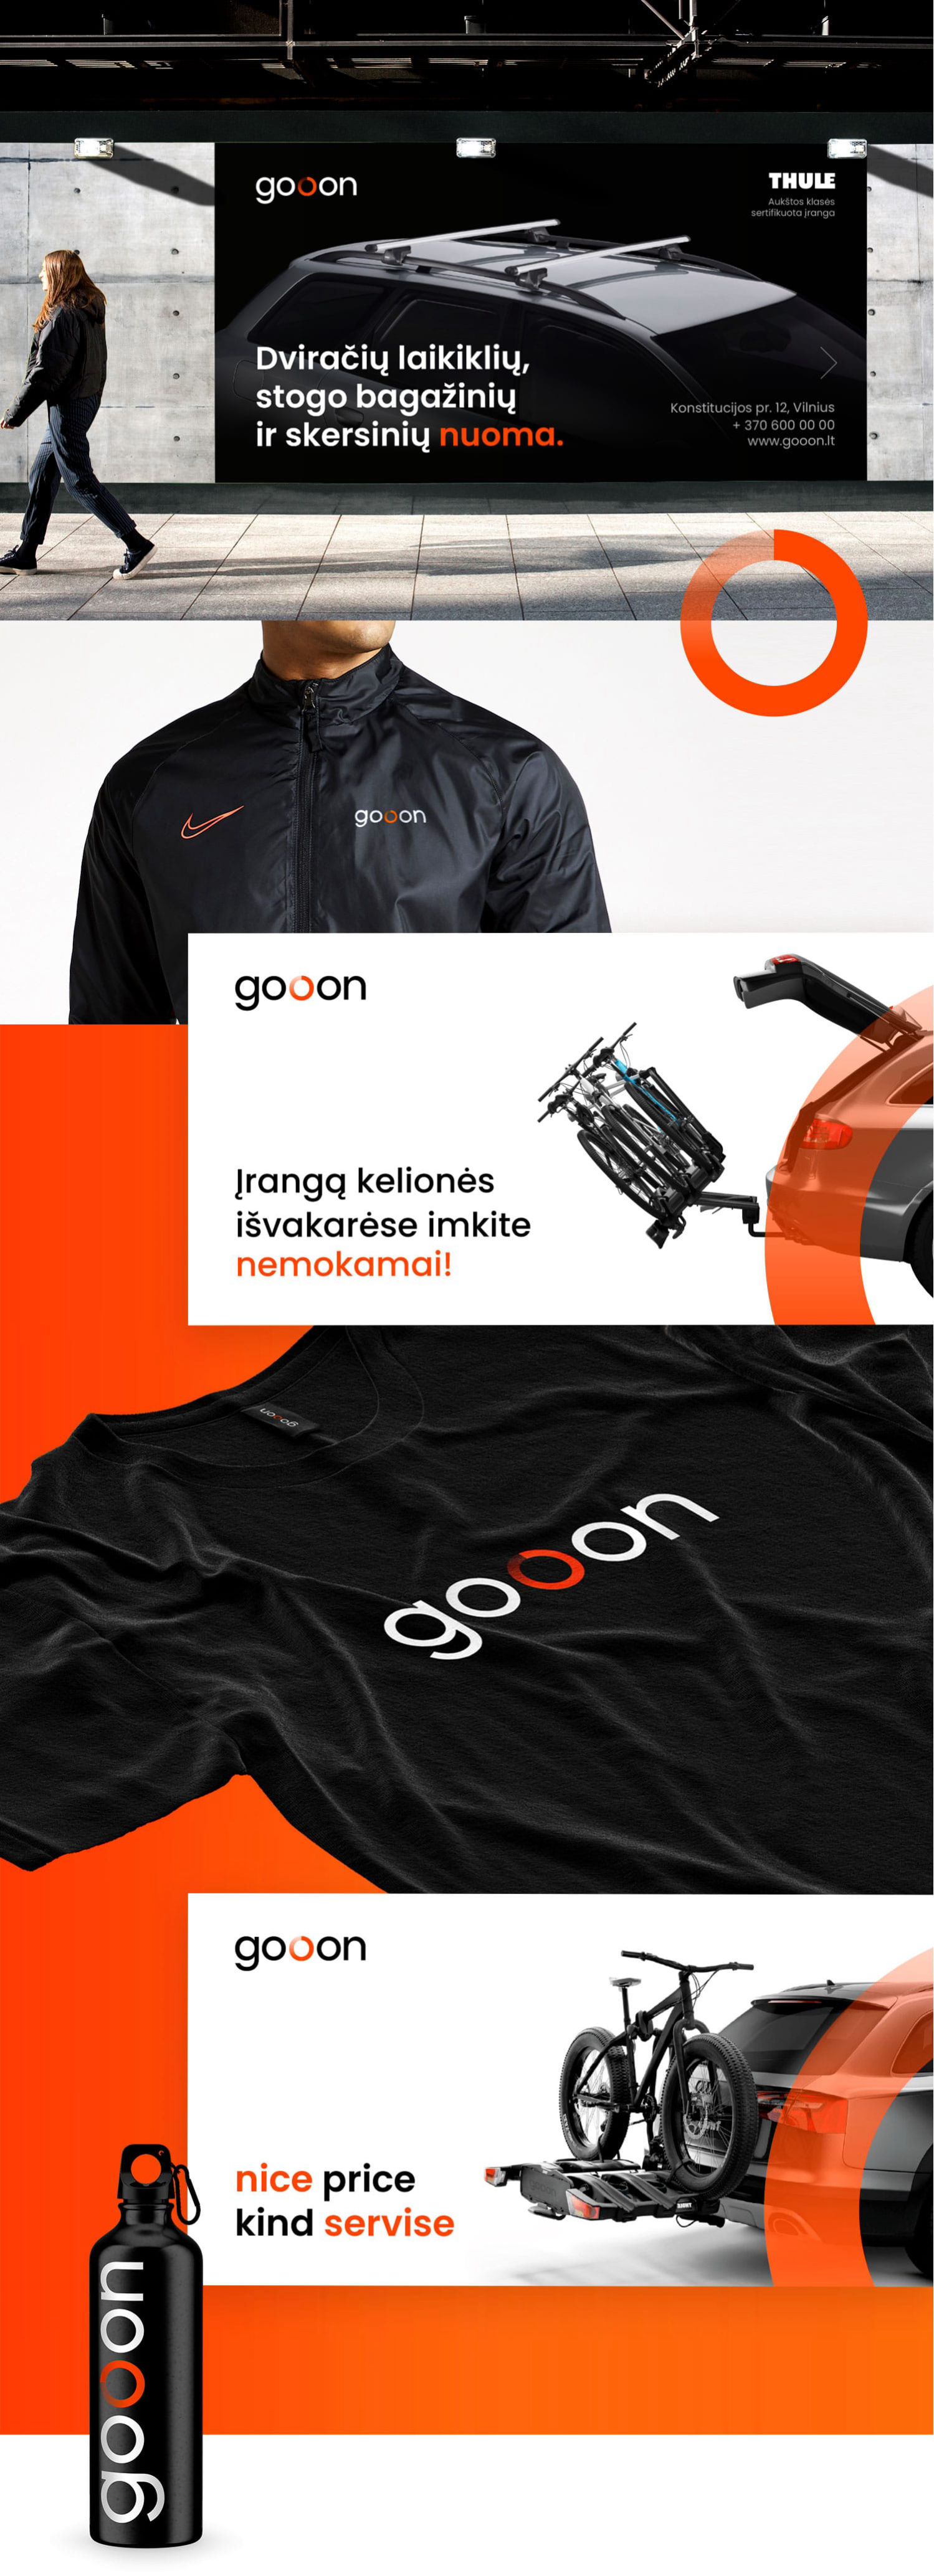 gooon-bicycle-racks-for-rent-identity-design